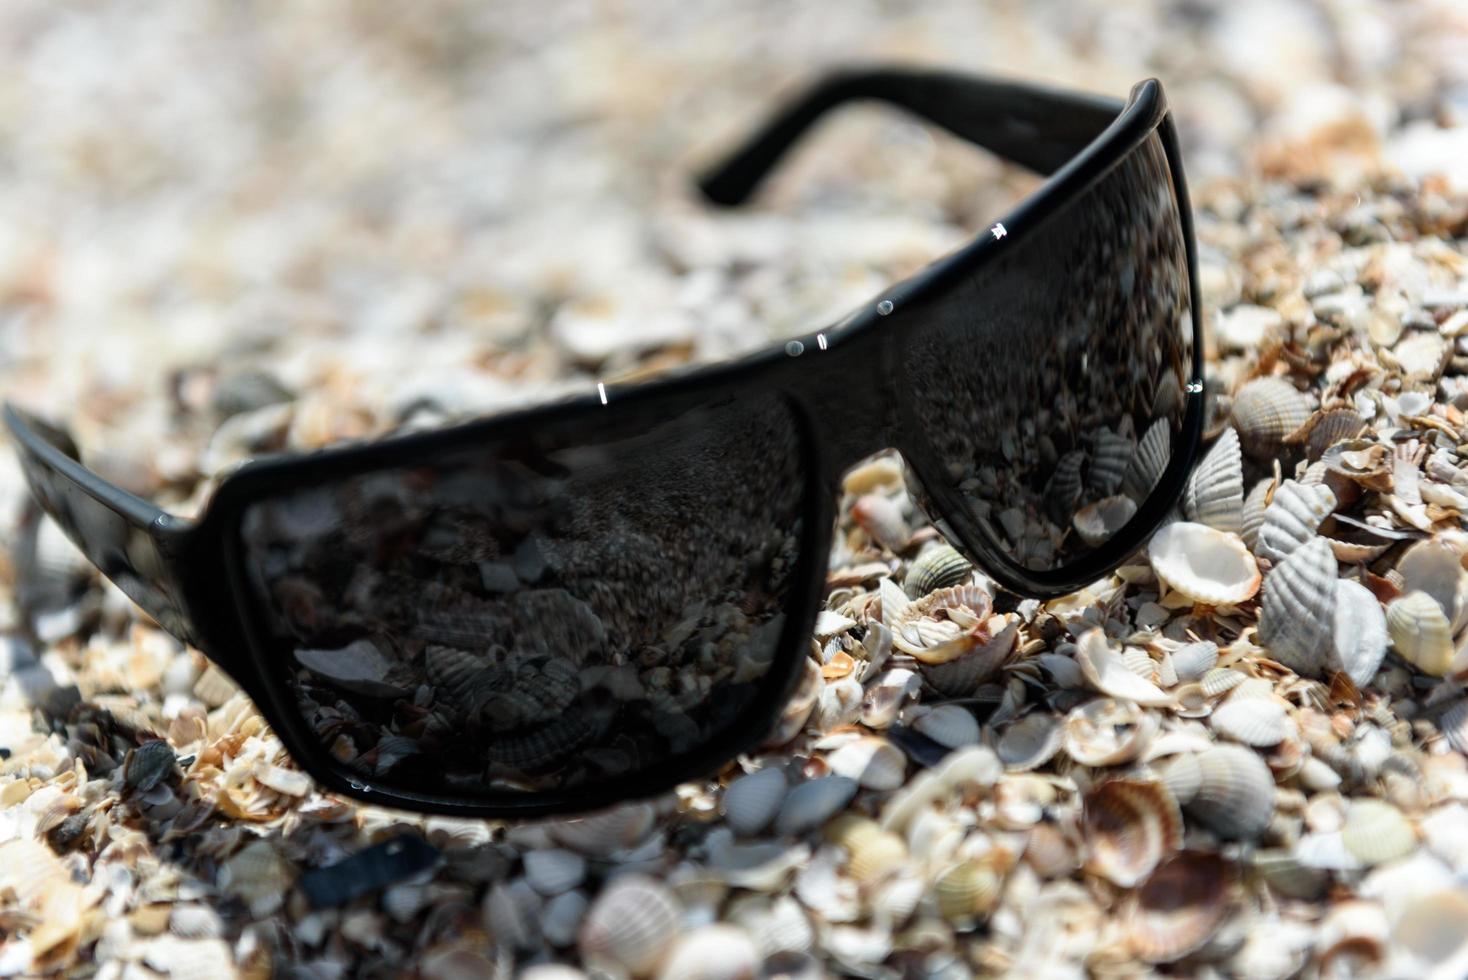 solglasögon på stranden foto